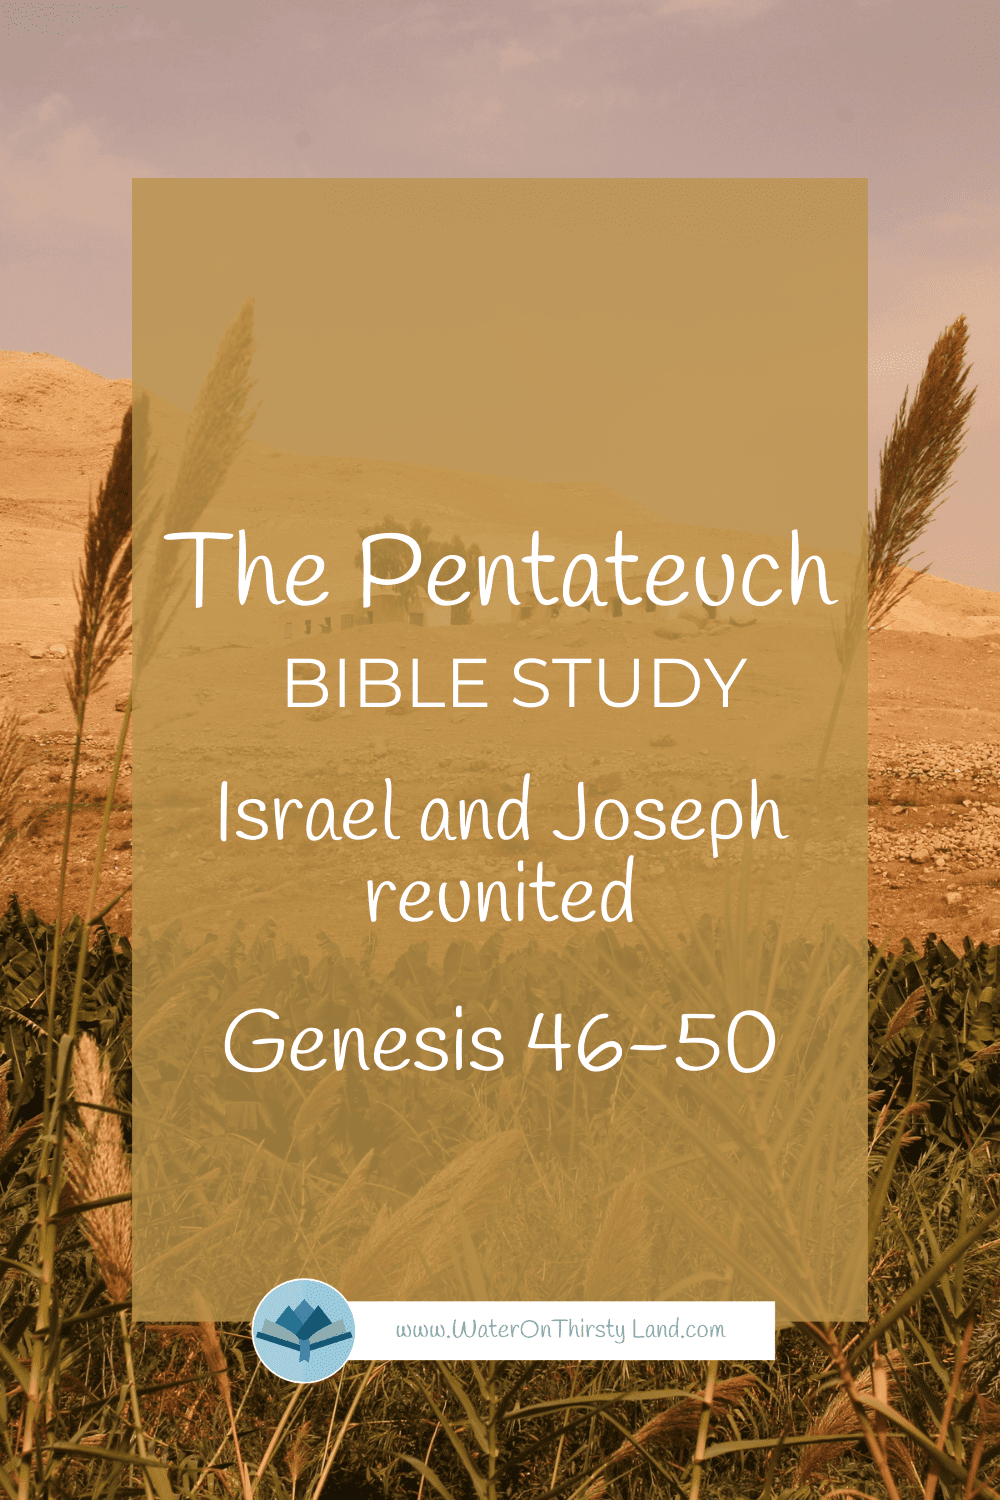 Pentateuch Israel and Joseph reunited Genesis 46-50